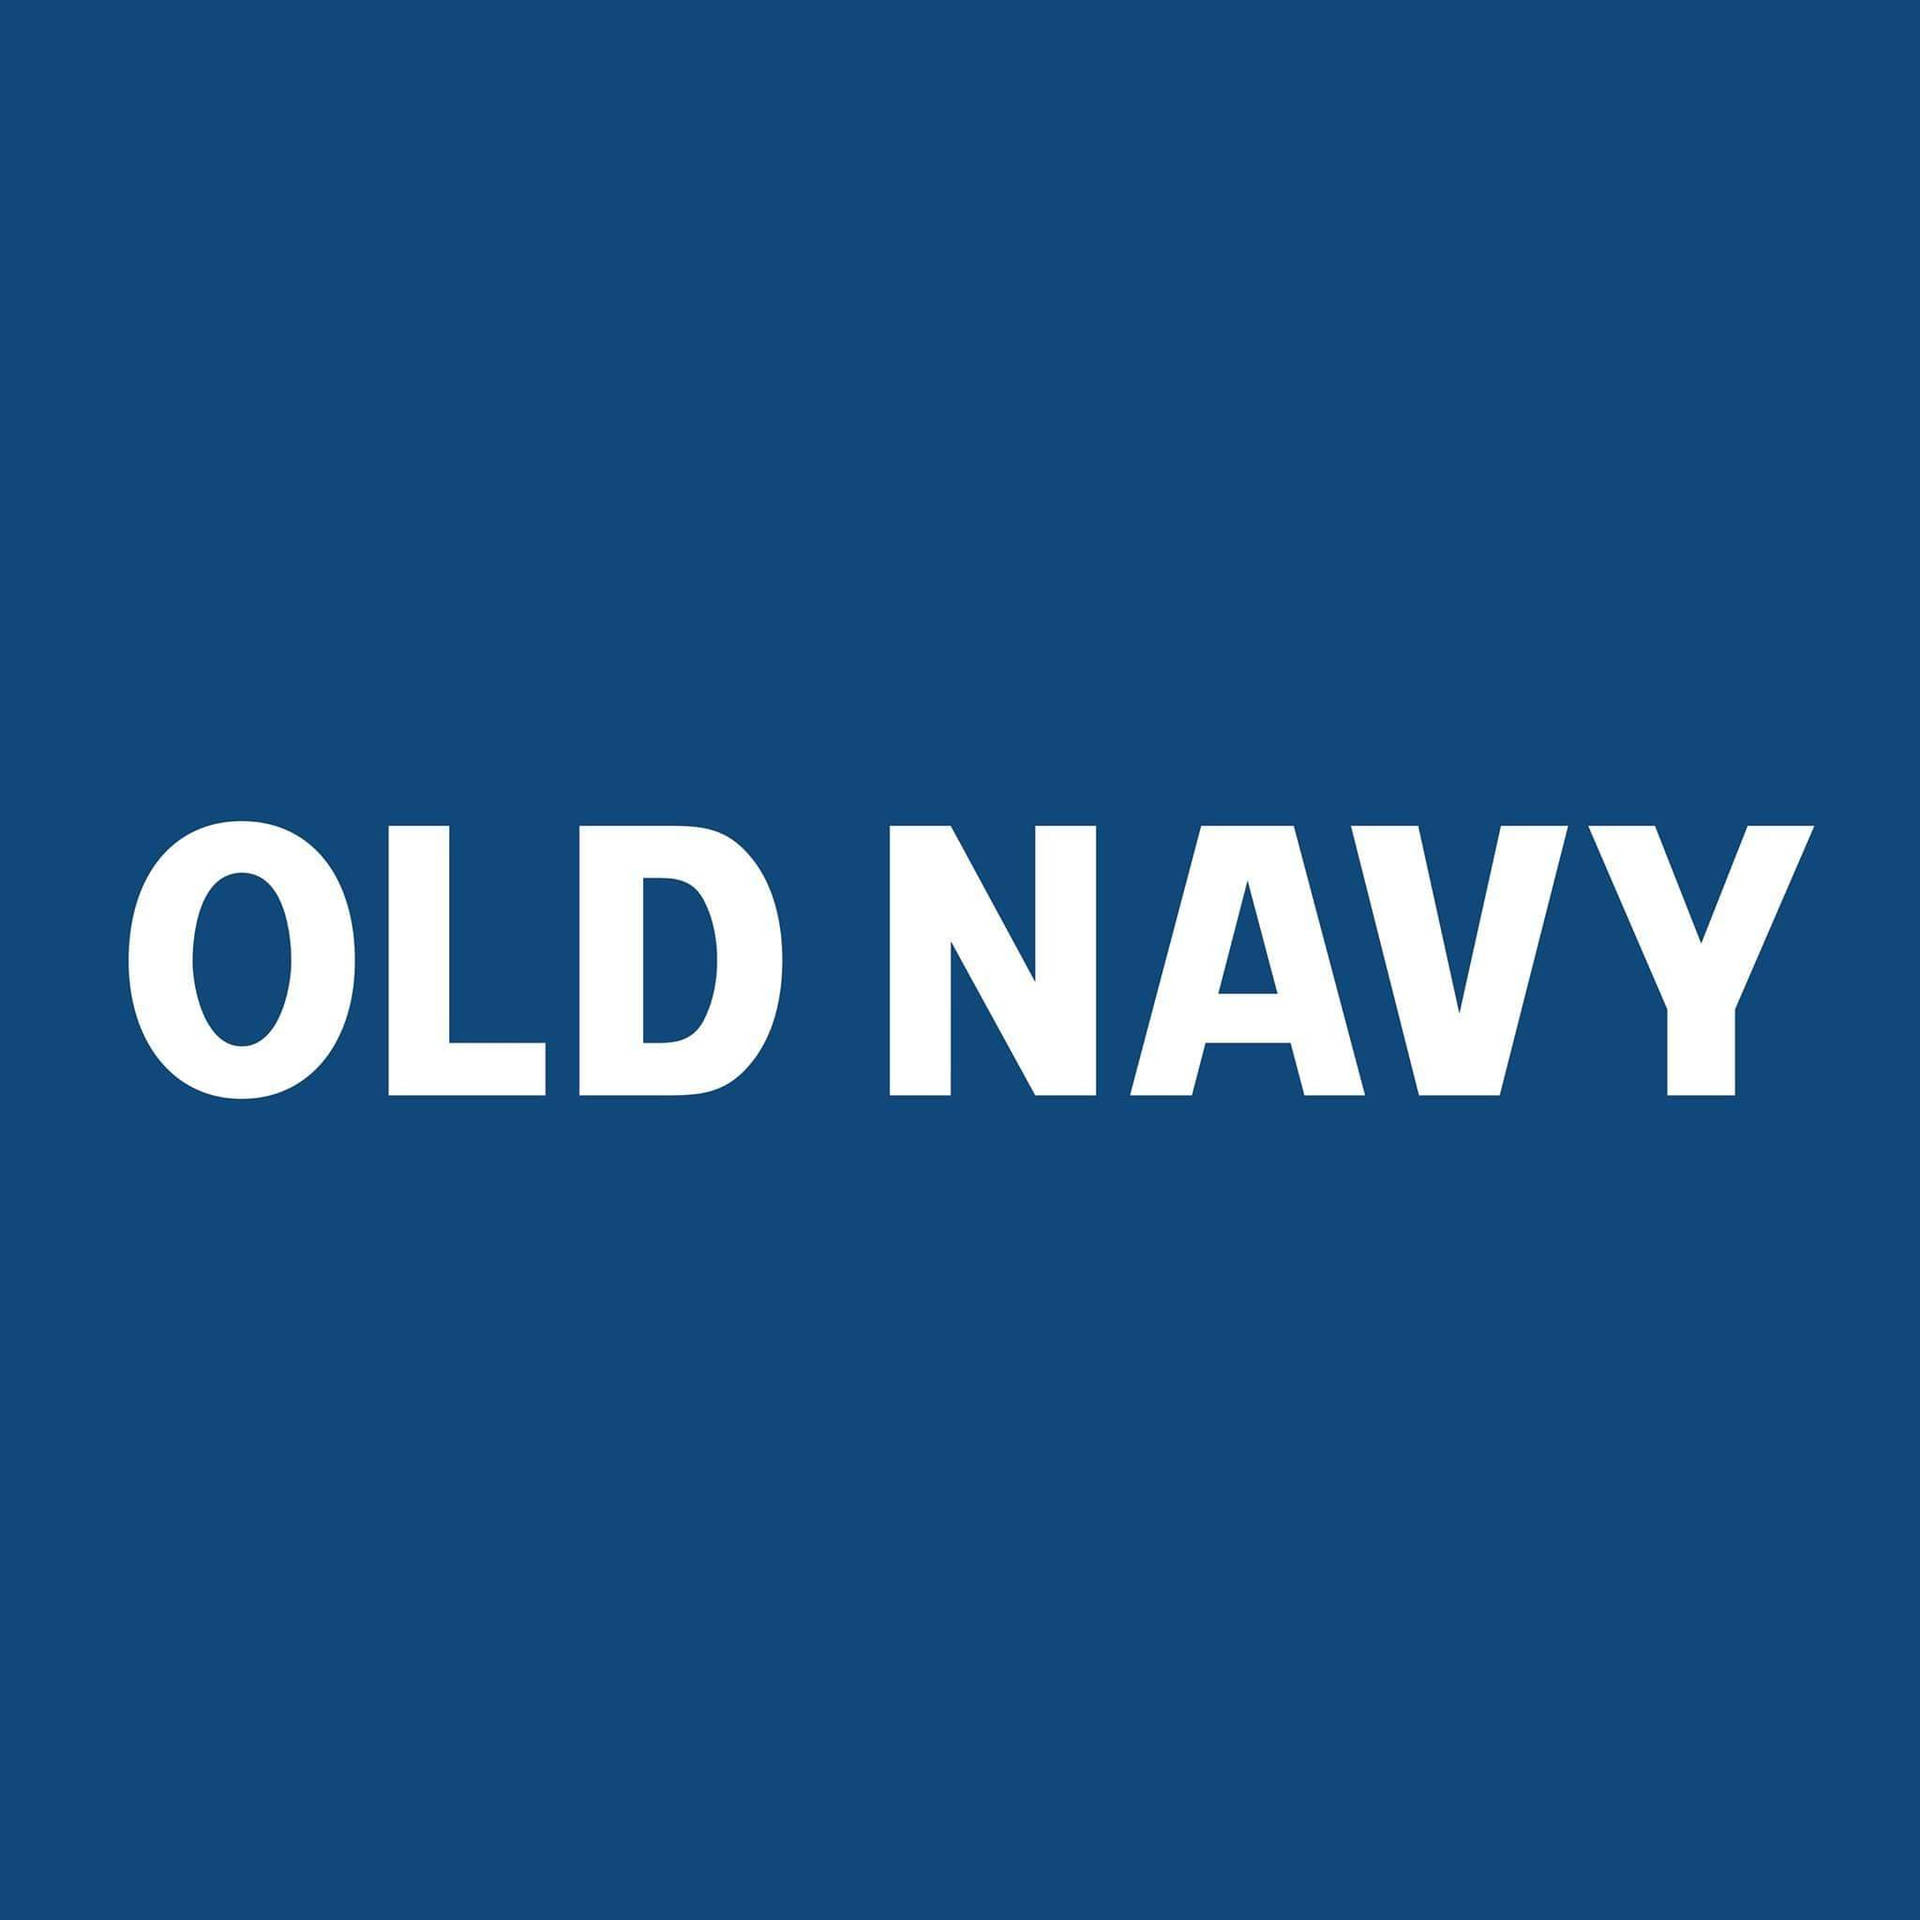 Old Navy Logo Blue Background Wallpaper